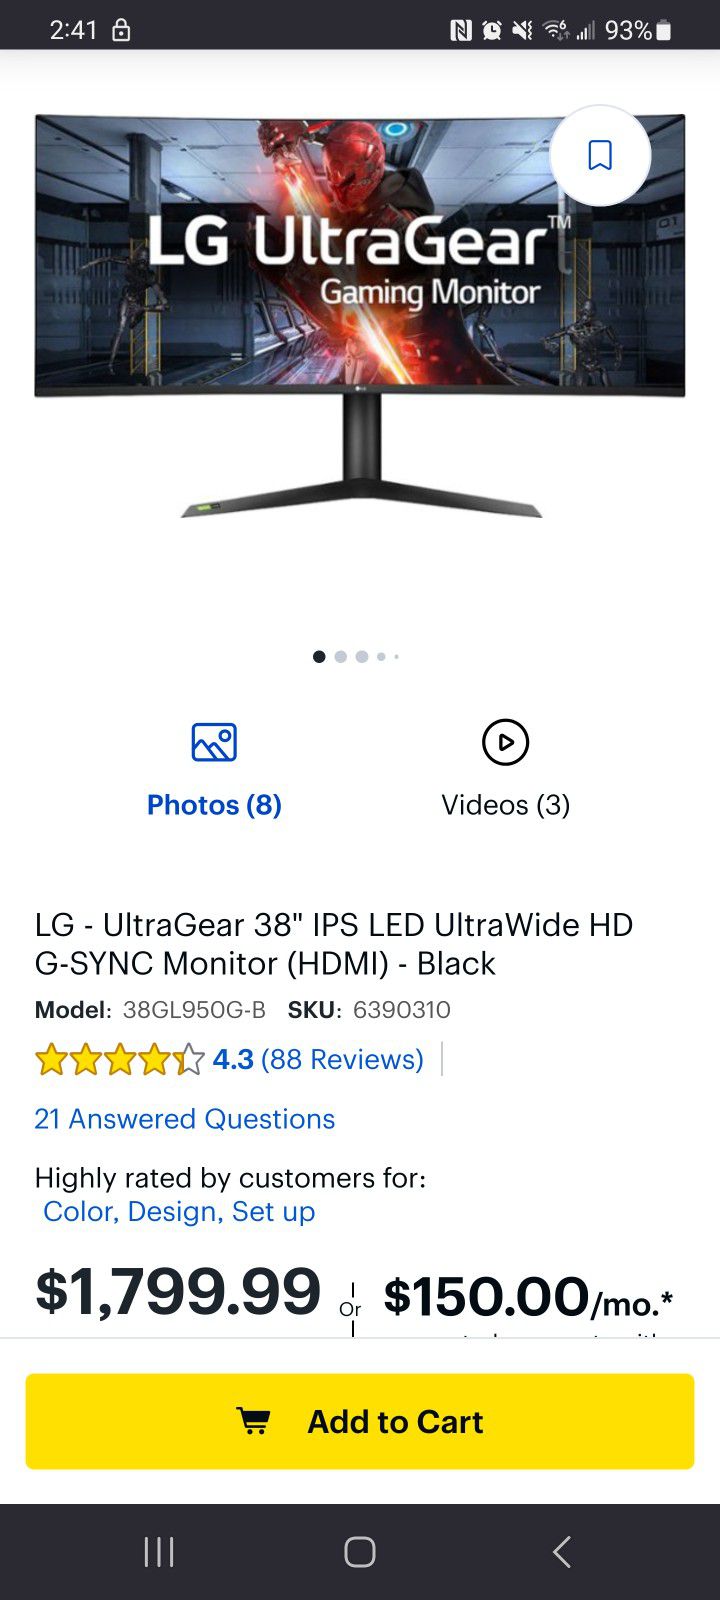 LG Ultragear 38 Inch Gaming Monitor